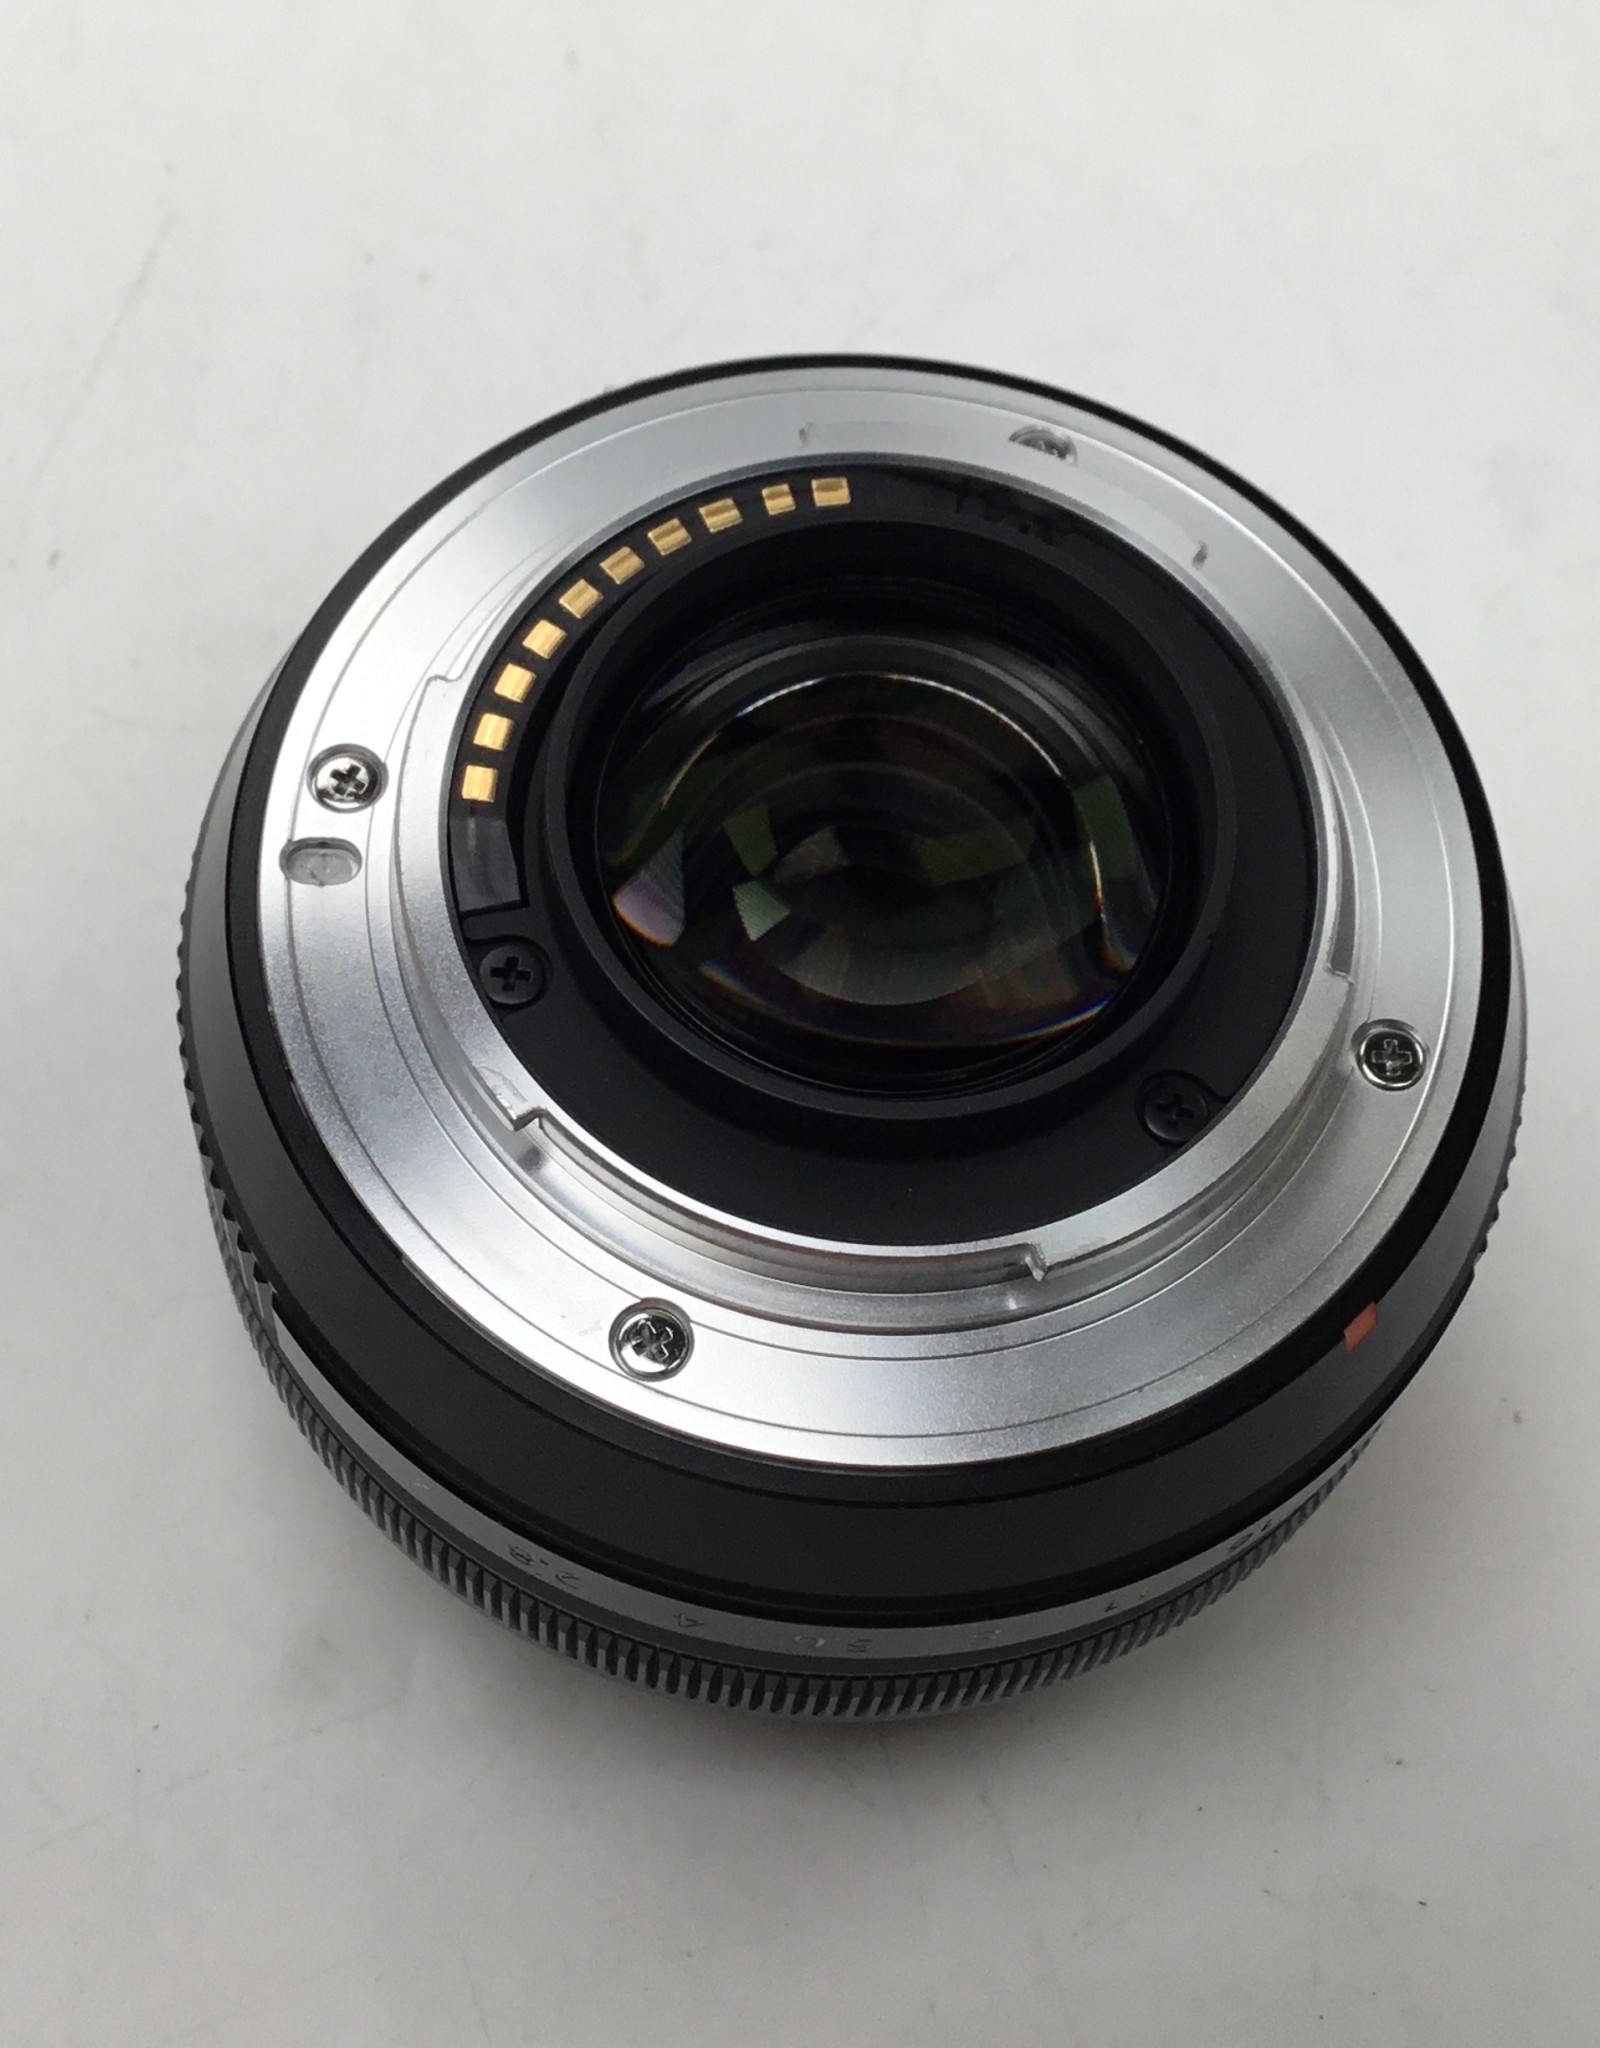 FUJI Fuji Super EBC 18mm f2 Lens Used Good